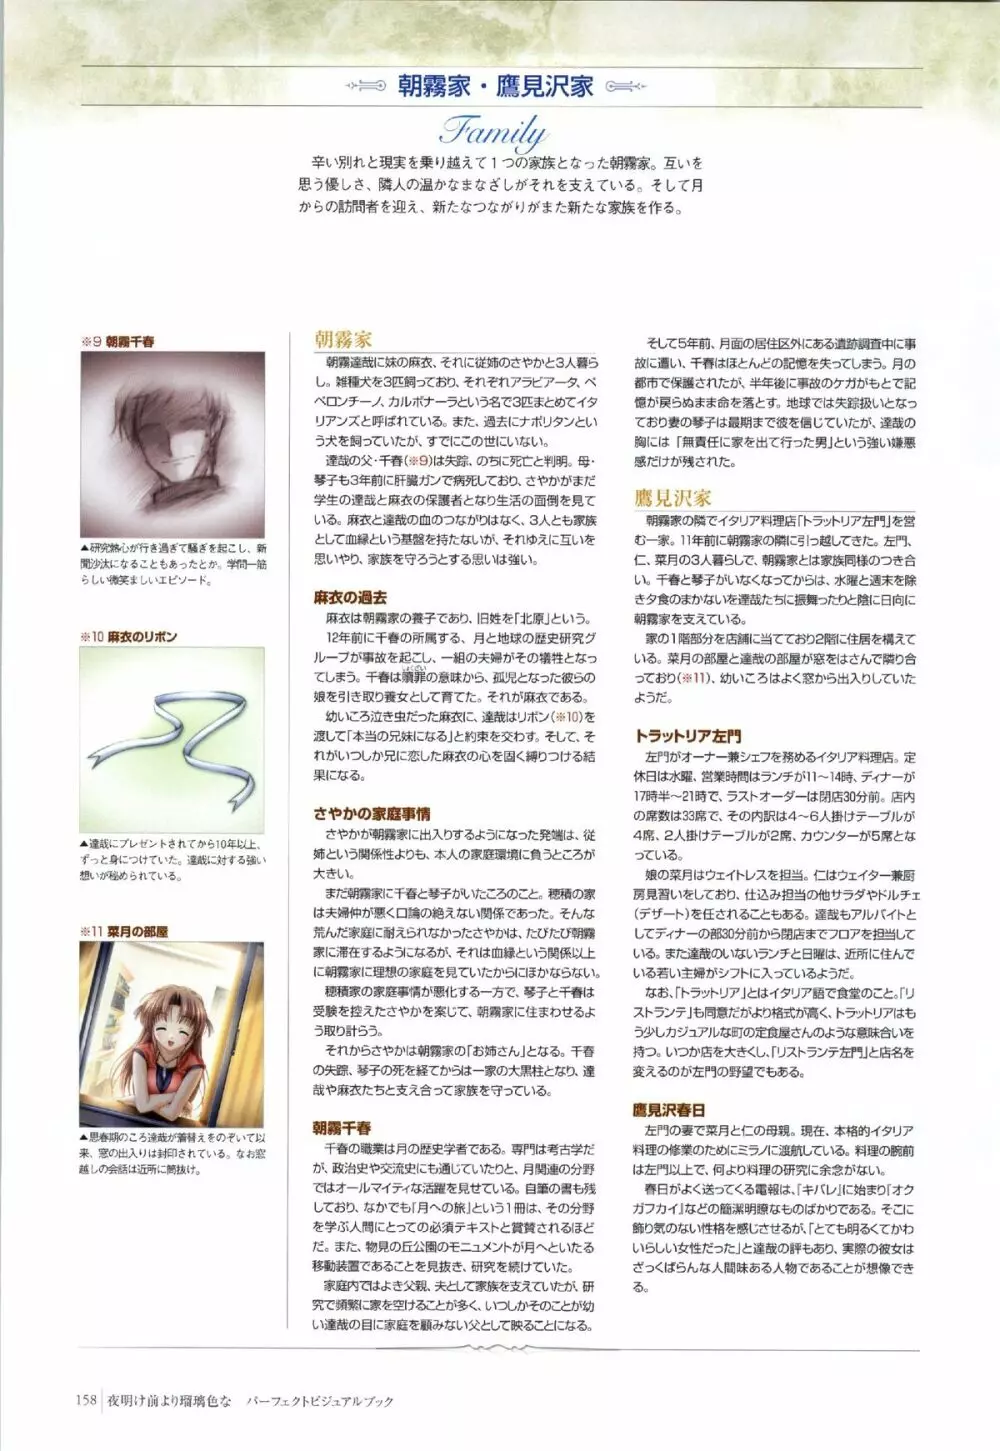 Yoake Mae Yori Ruri Iro Na ( Crescent Love ) Perfect Visual Book 155ページ